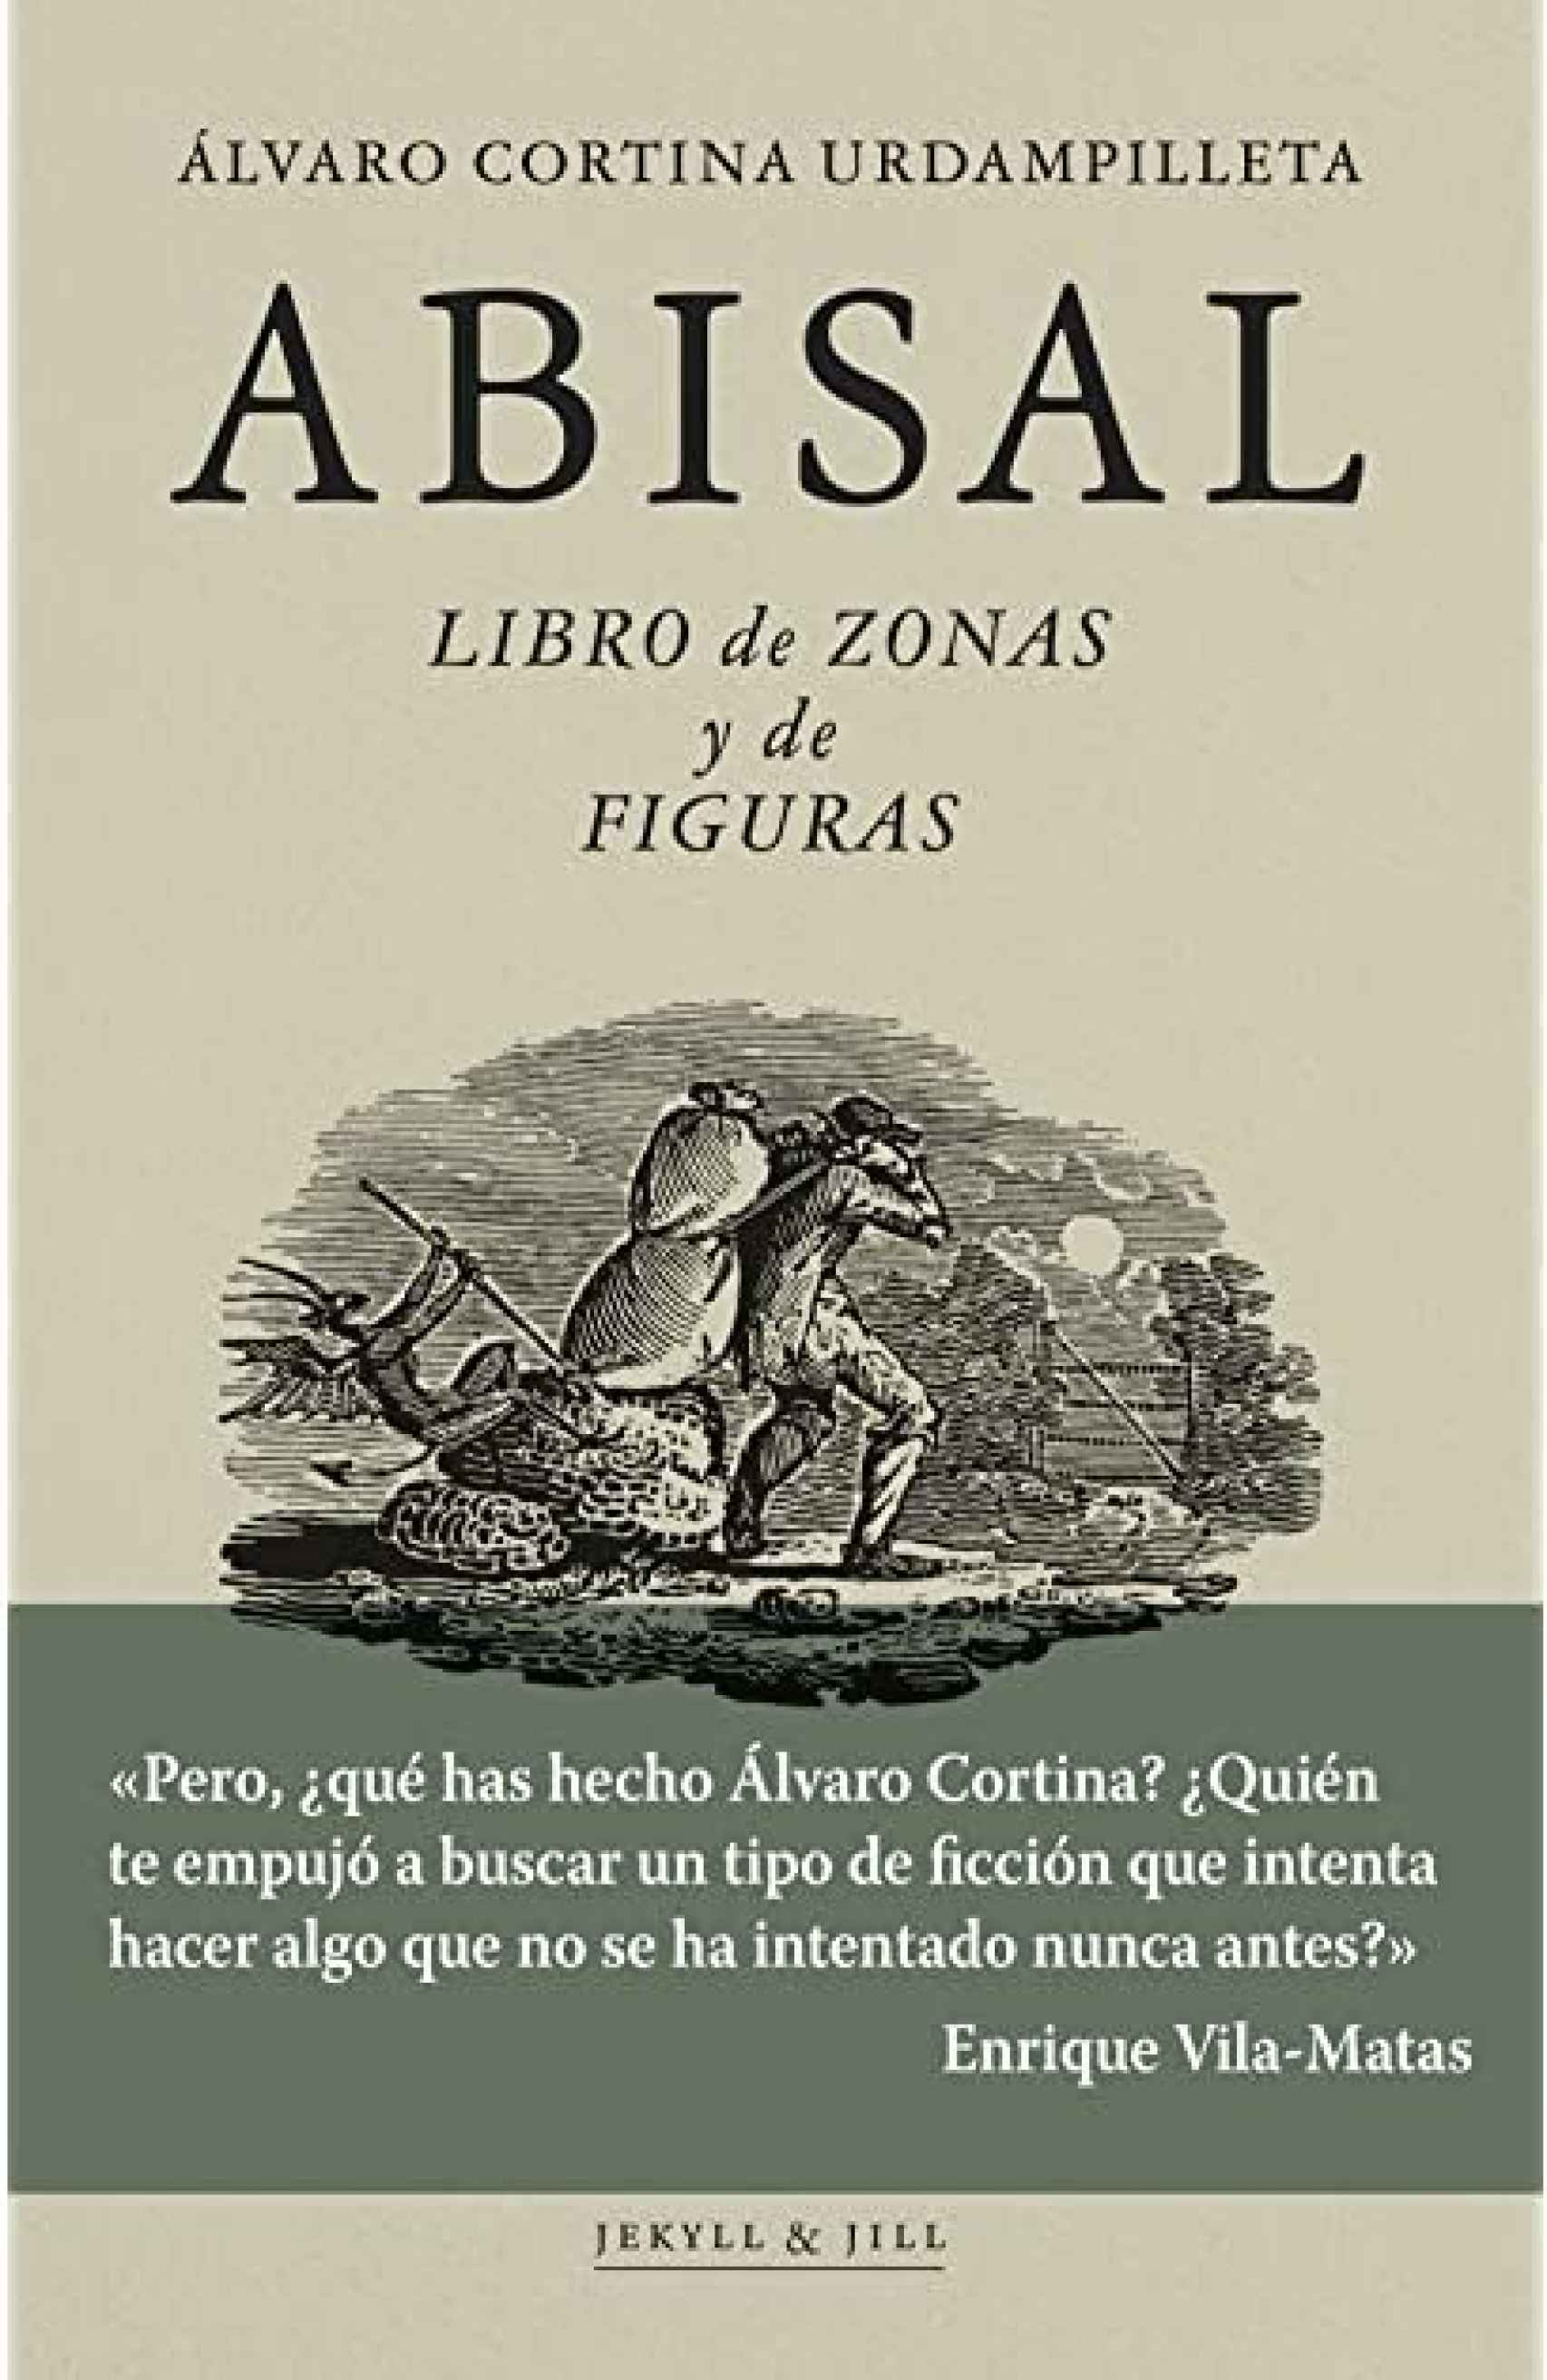 Portada de 'Abisal' de Álvaro Cortina Urdampilleta.